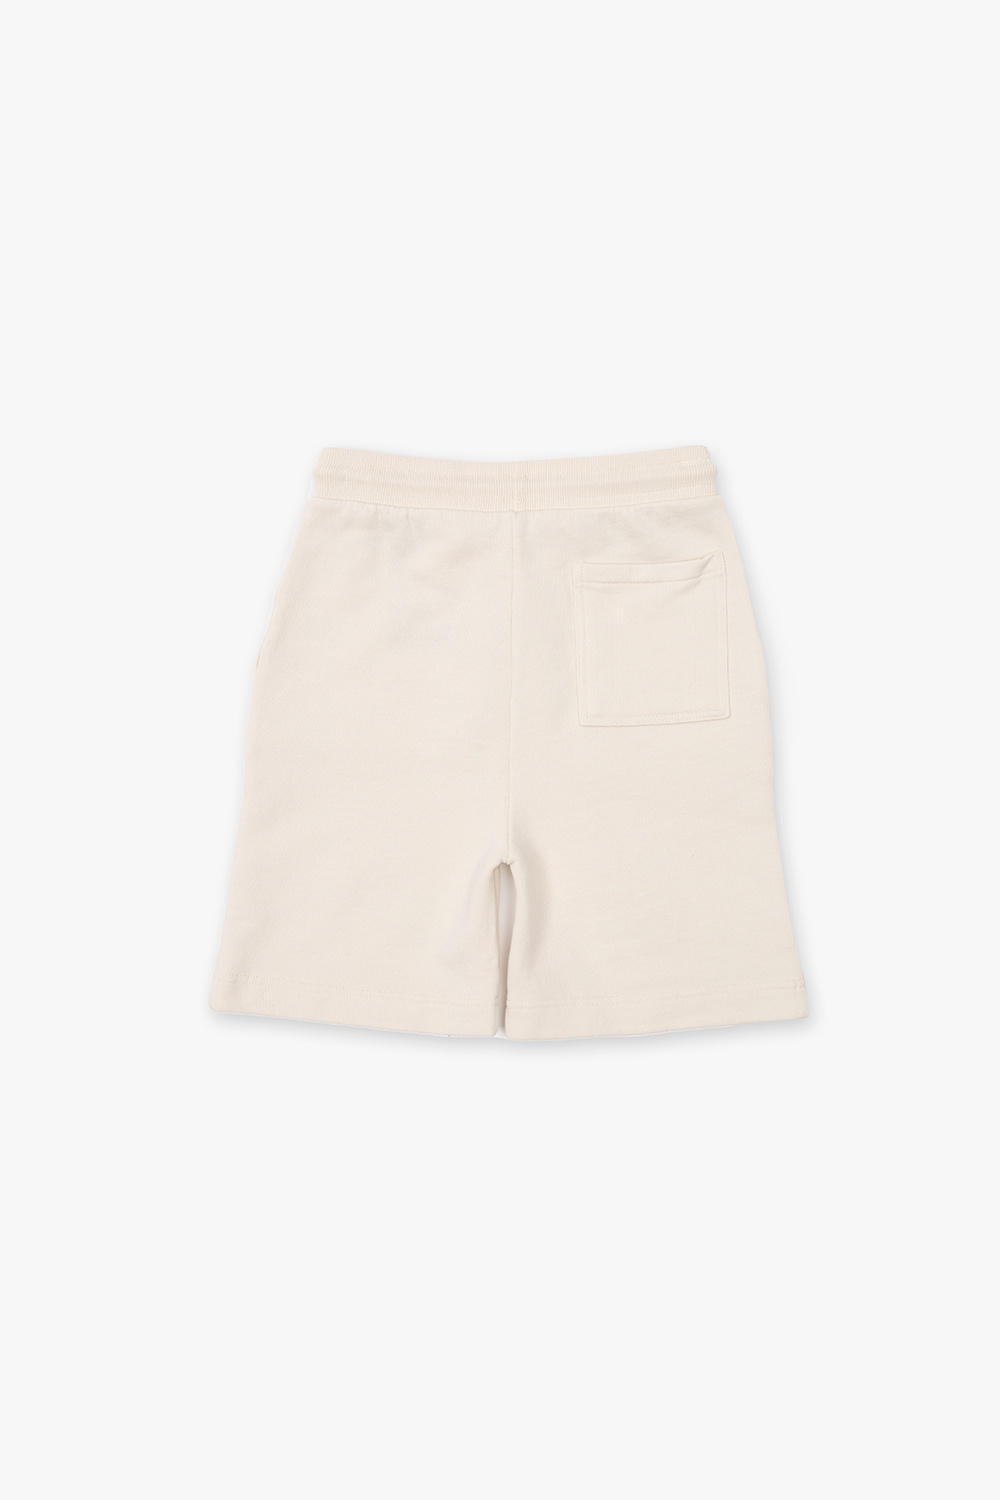 Bonpoint  ‘Chuck’ cotton shorts